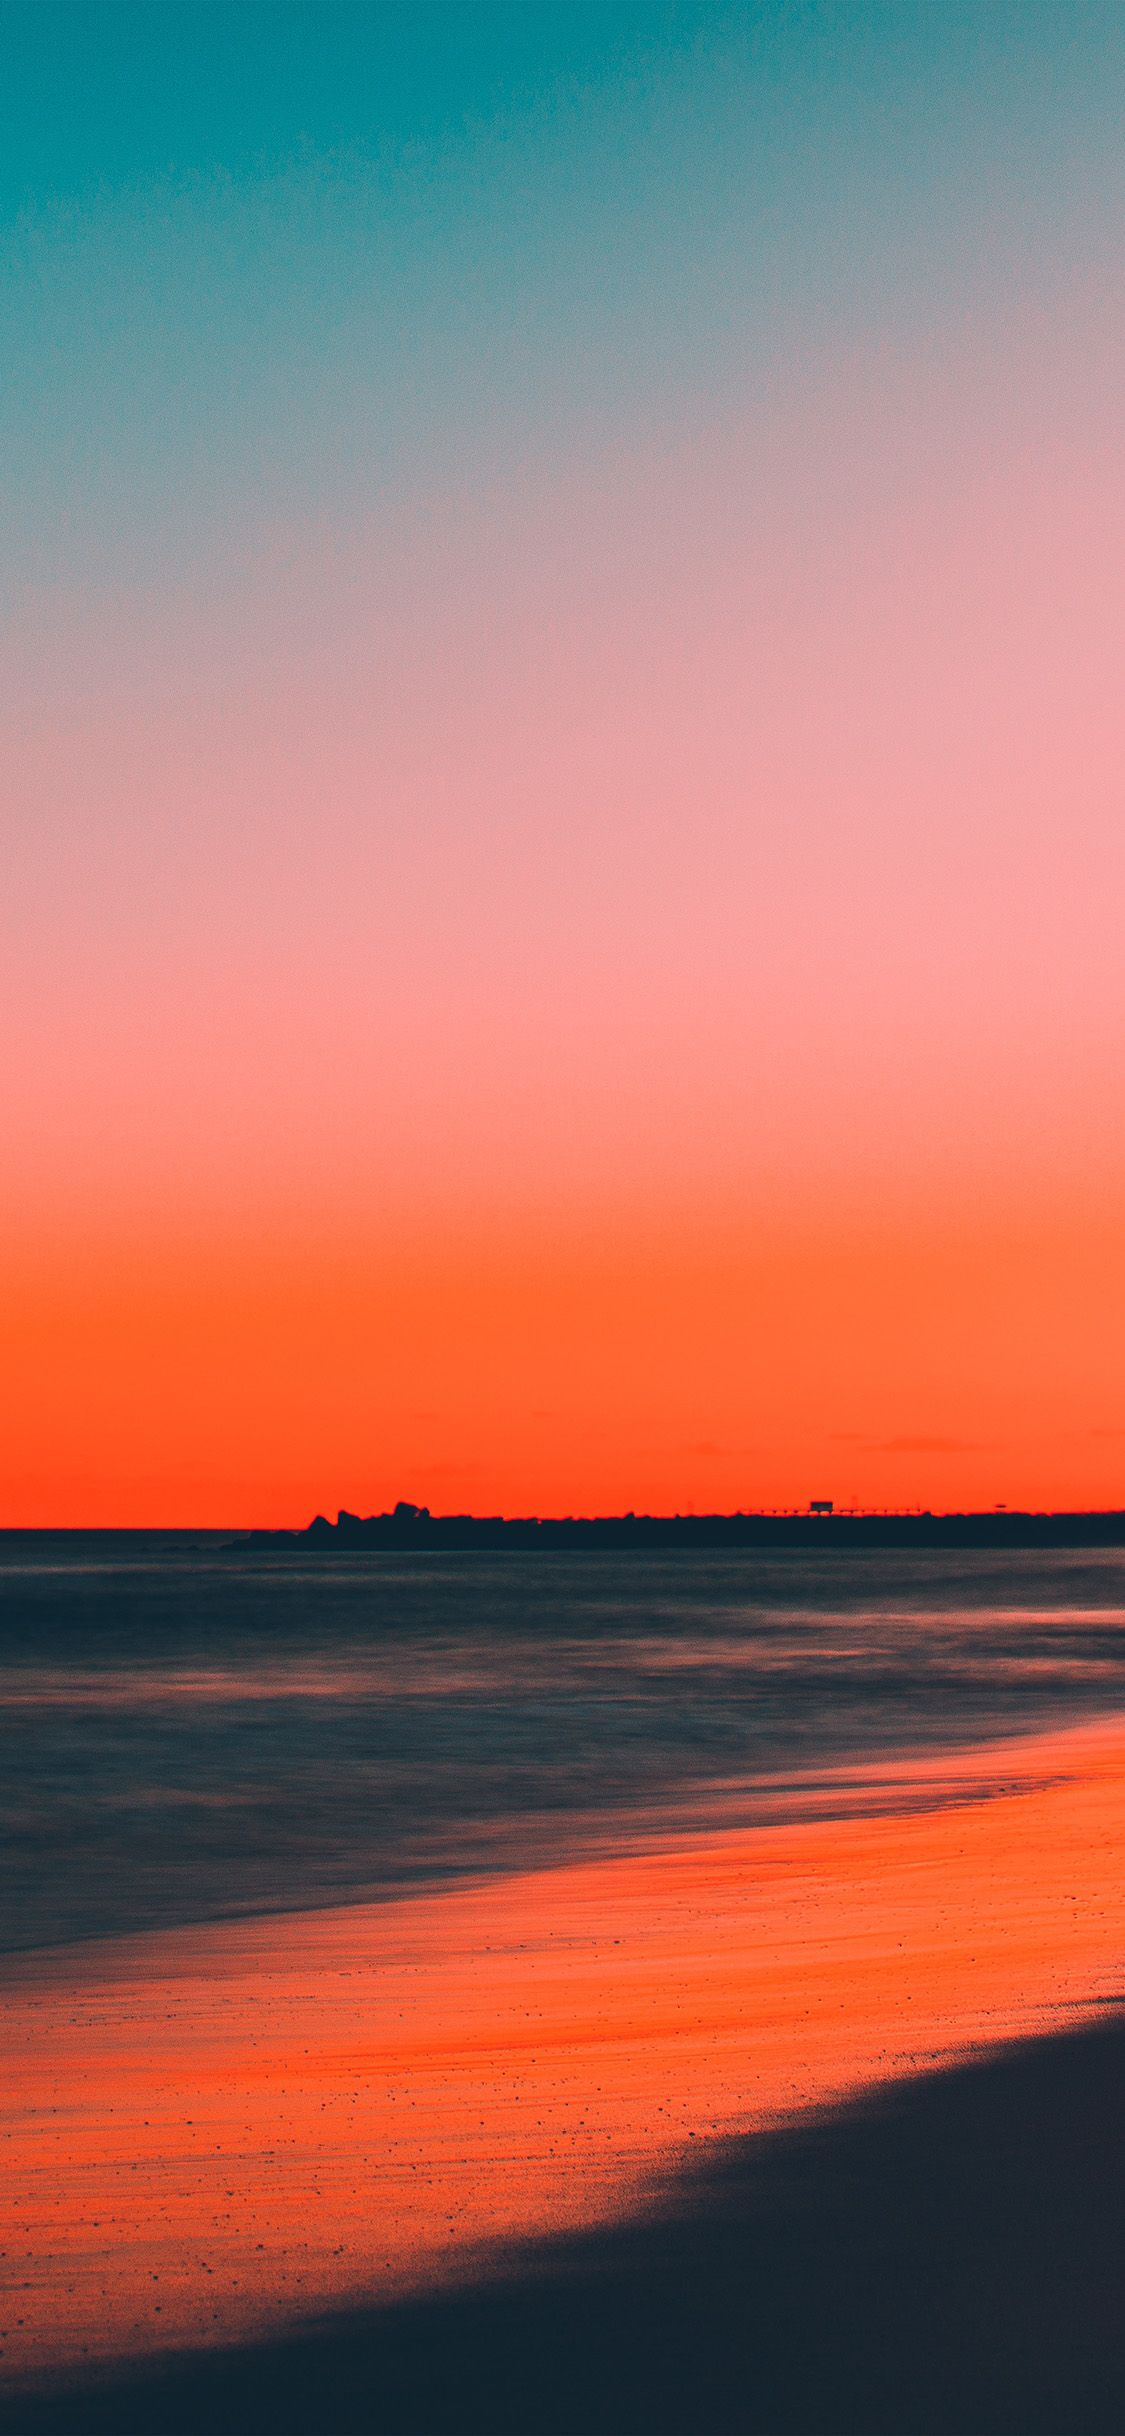 Sunset beach iPhone Wallpaper Free Download